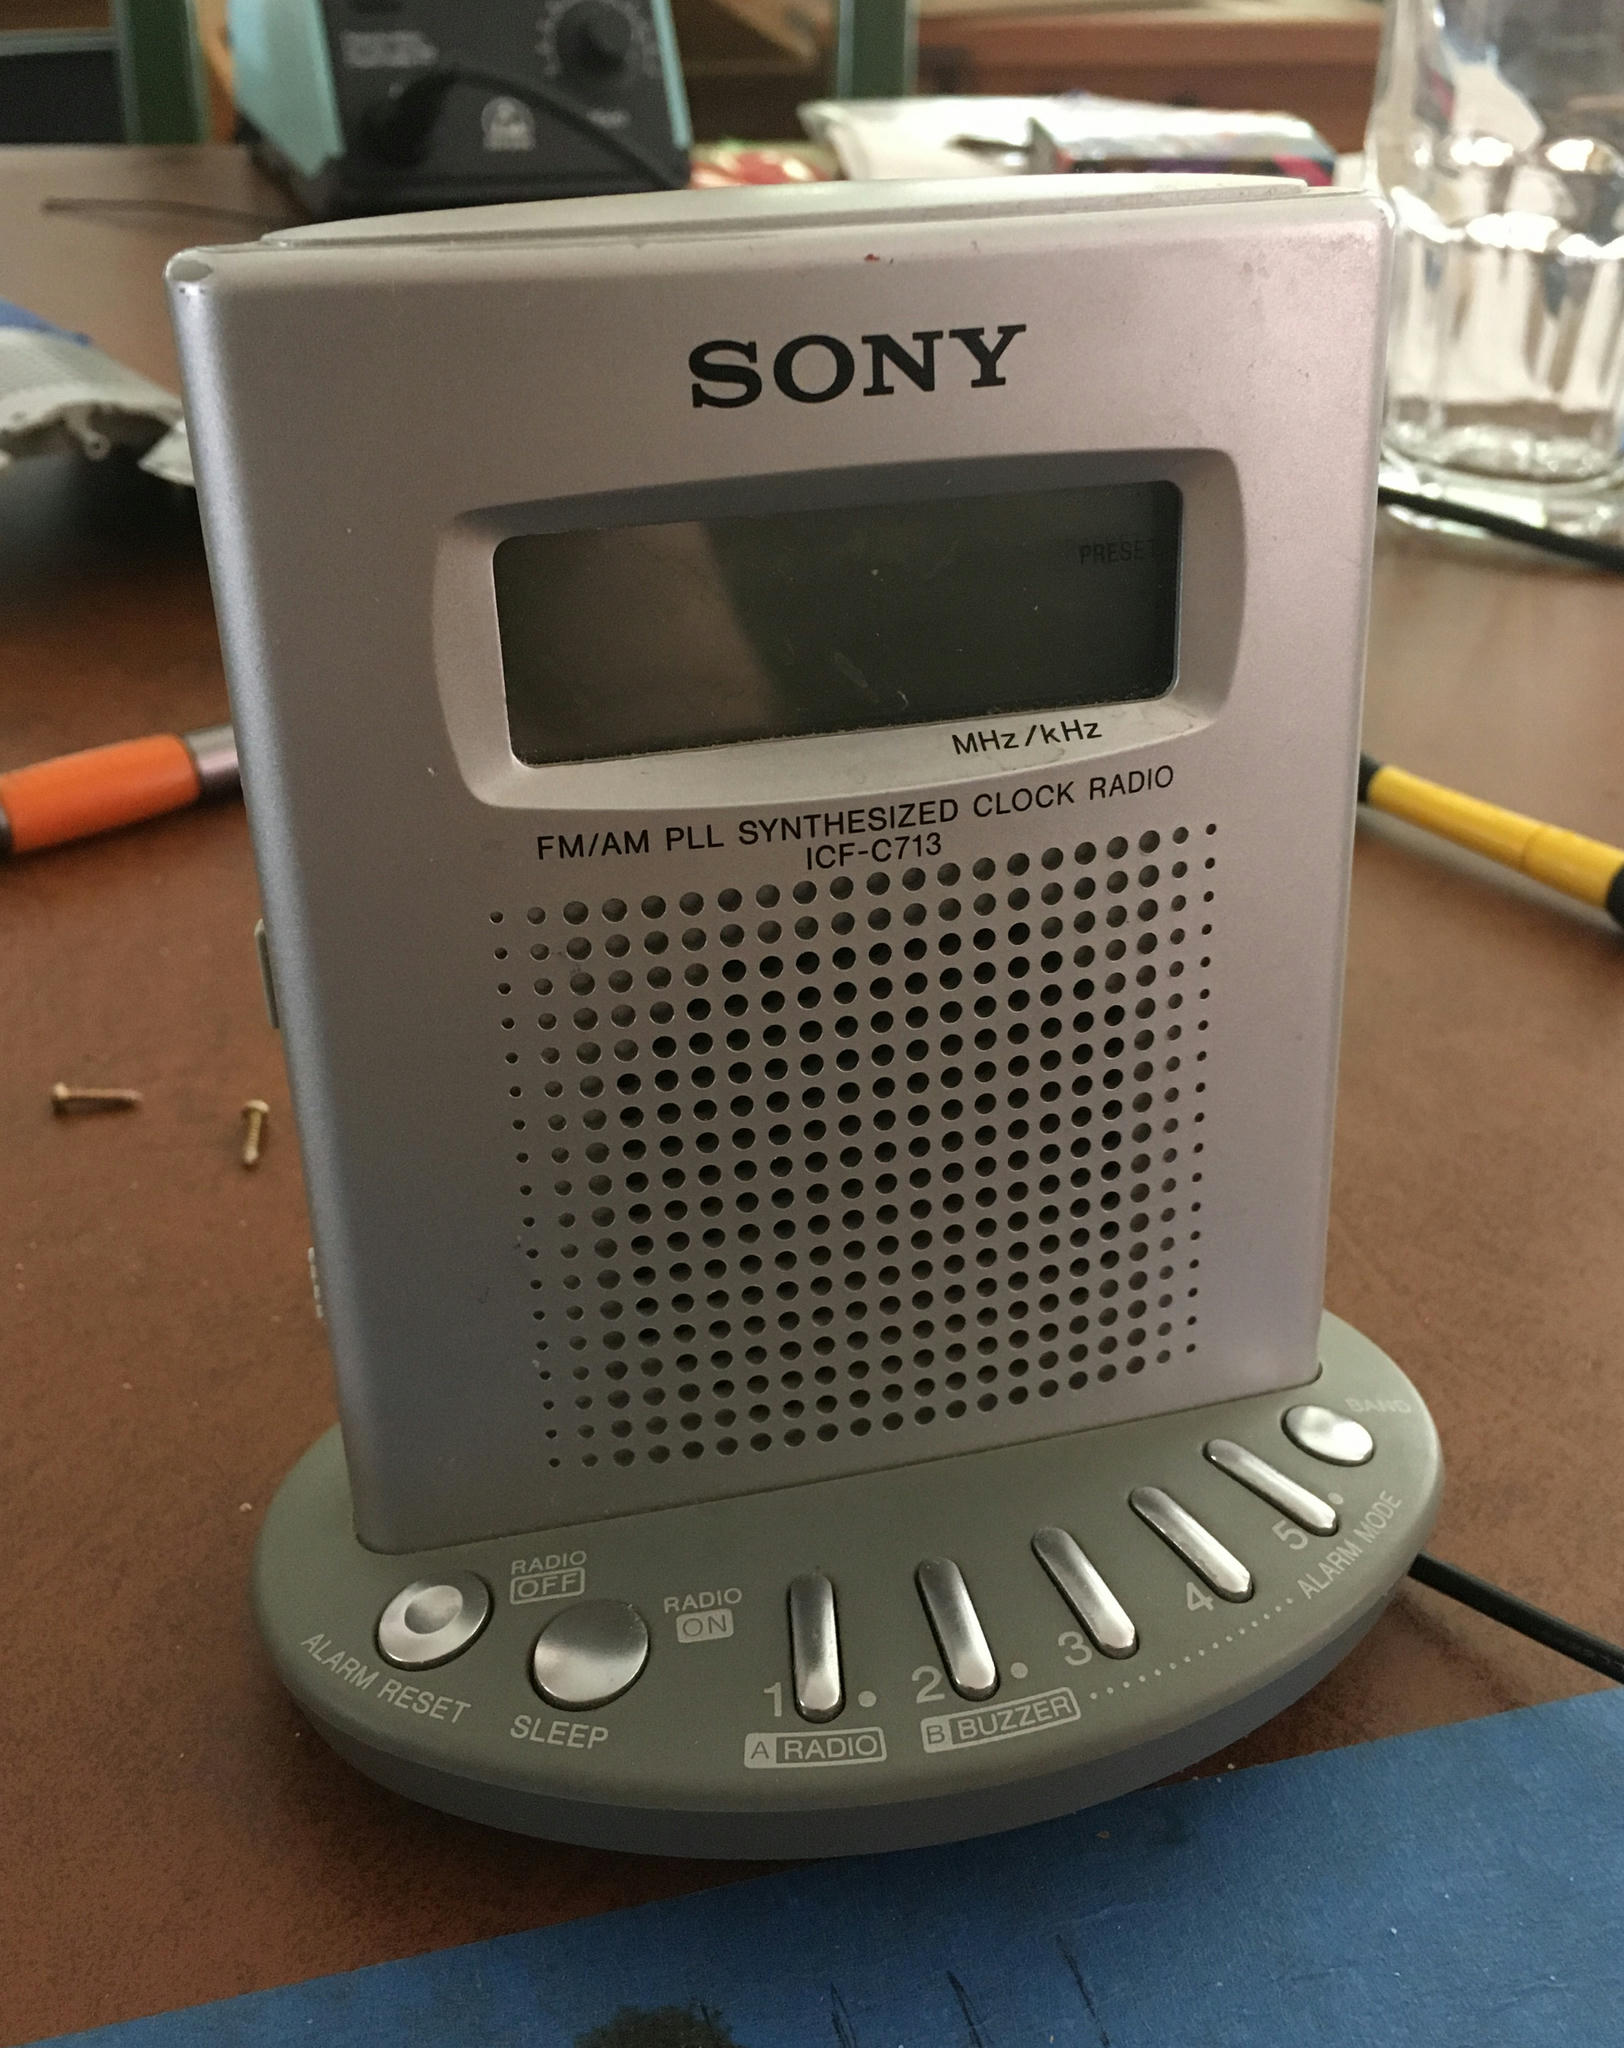 The Sony ICF-C713 clock radio